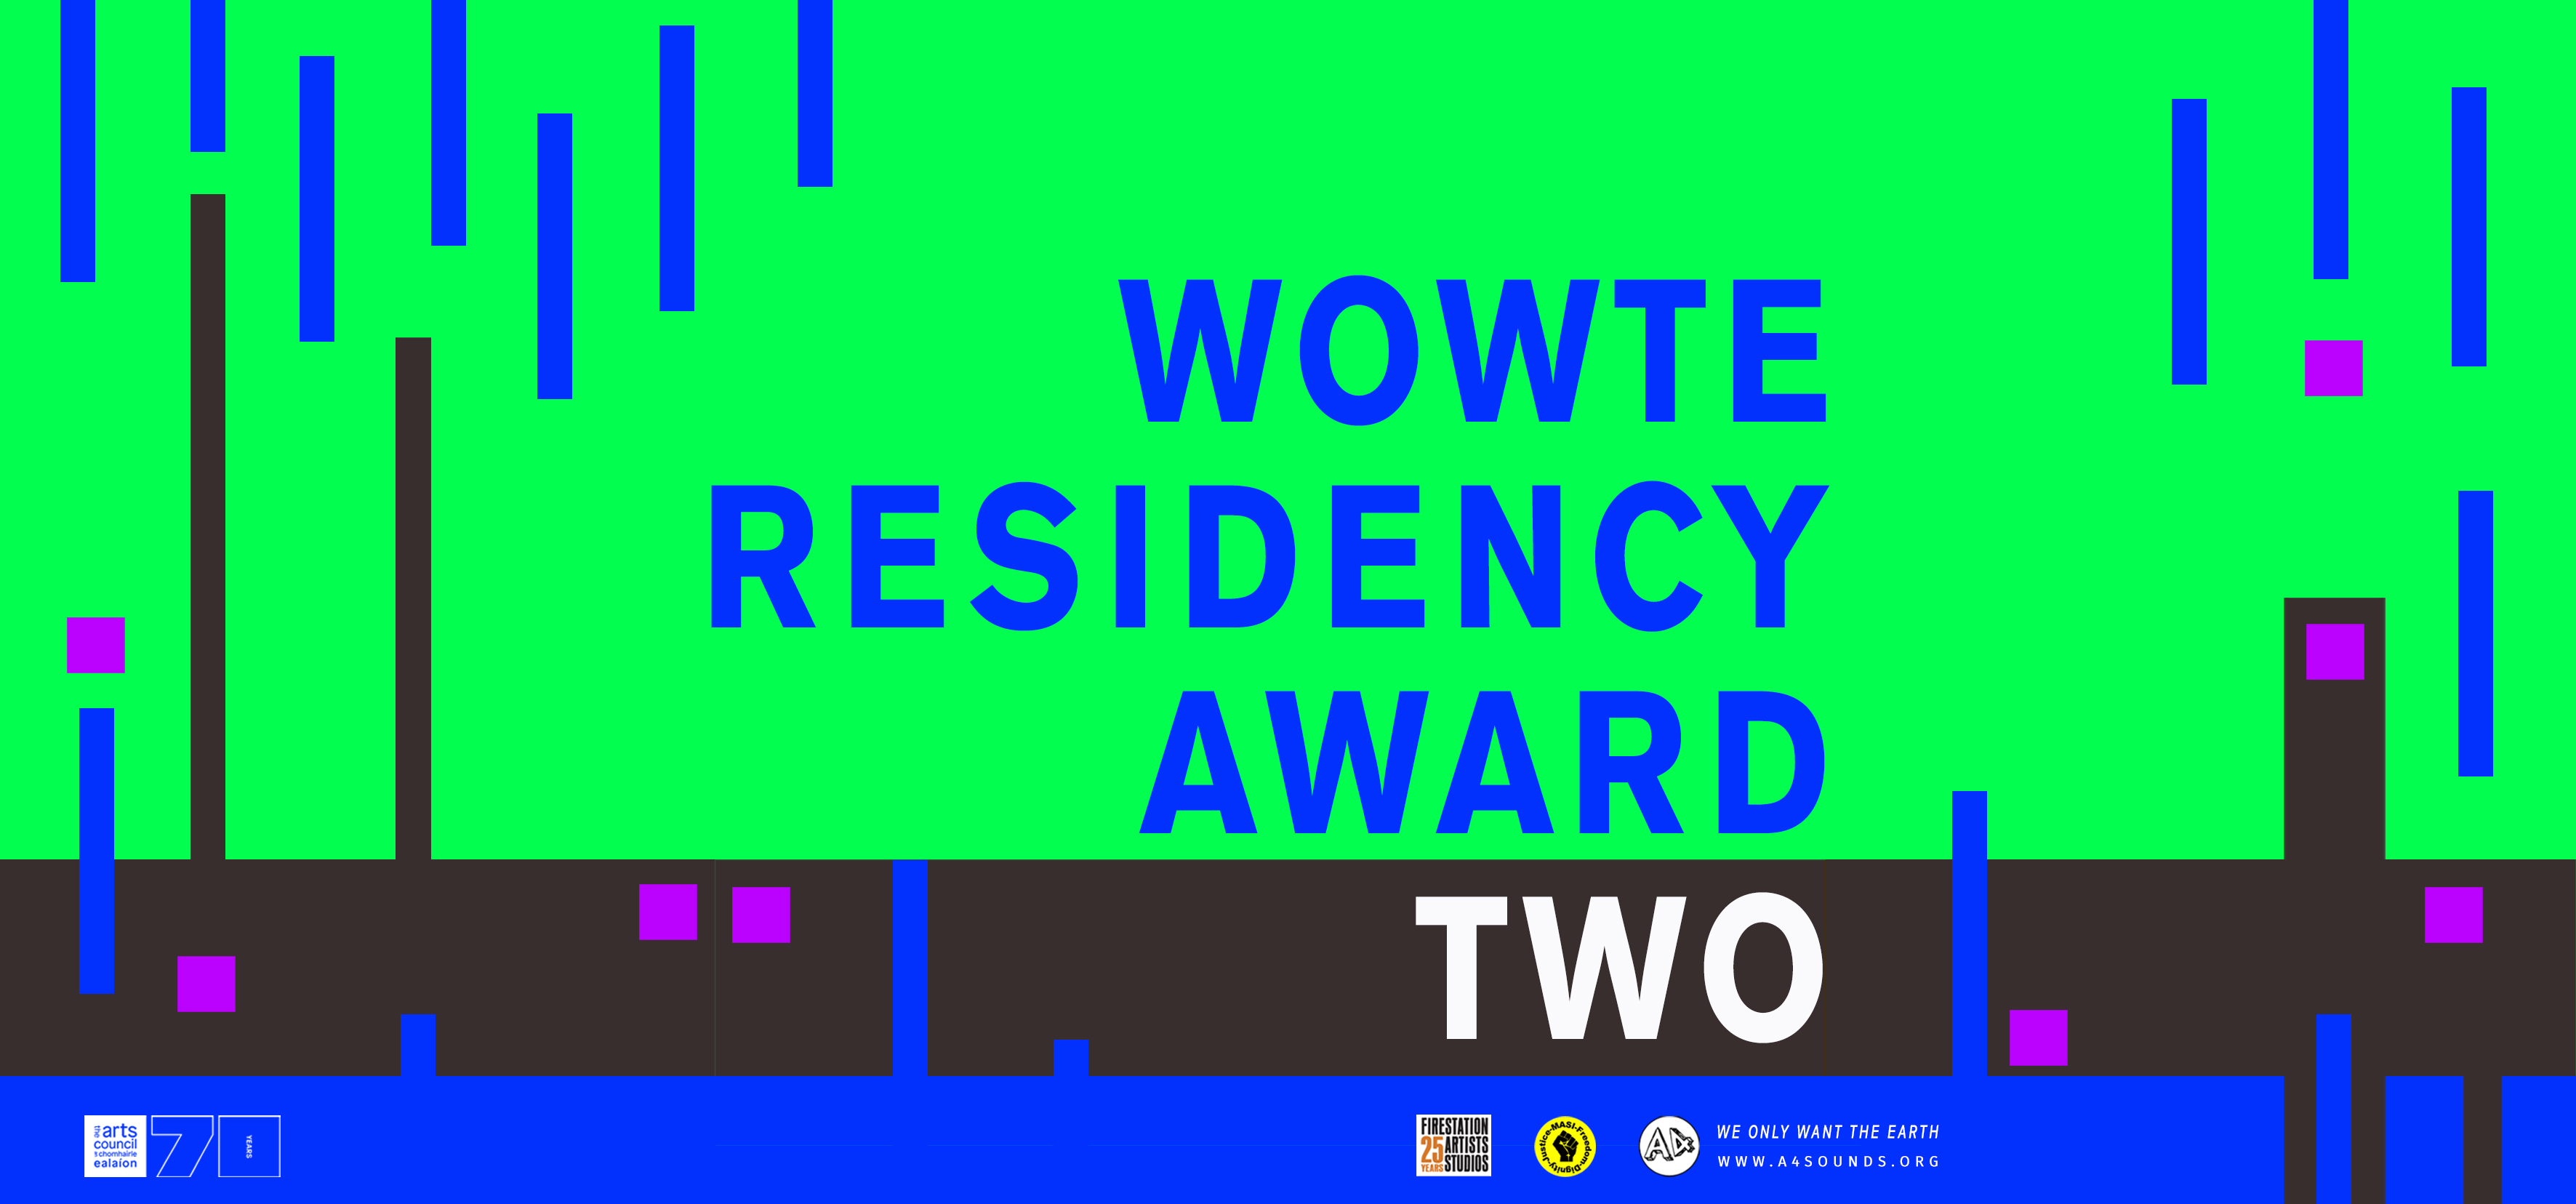 WOWTE-2022-RESIDENCY-AWARD-TWO-1